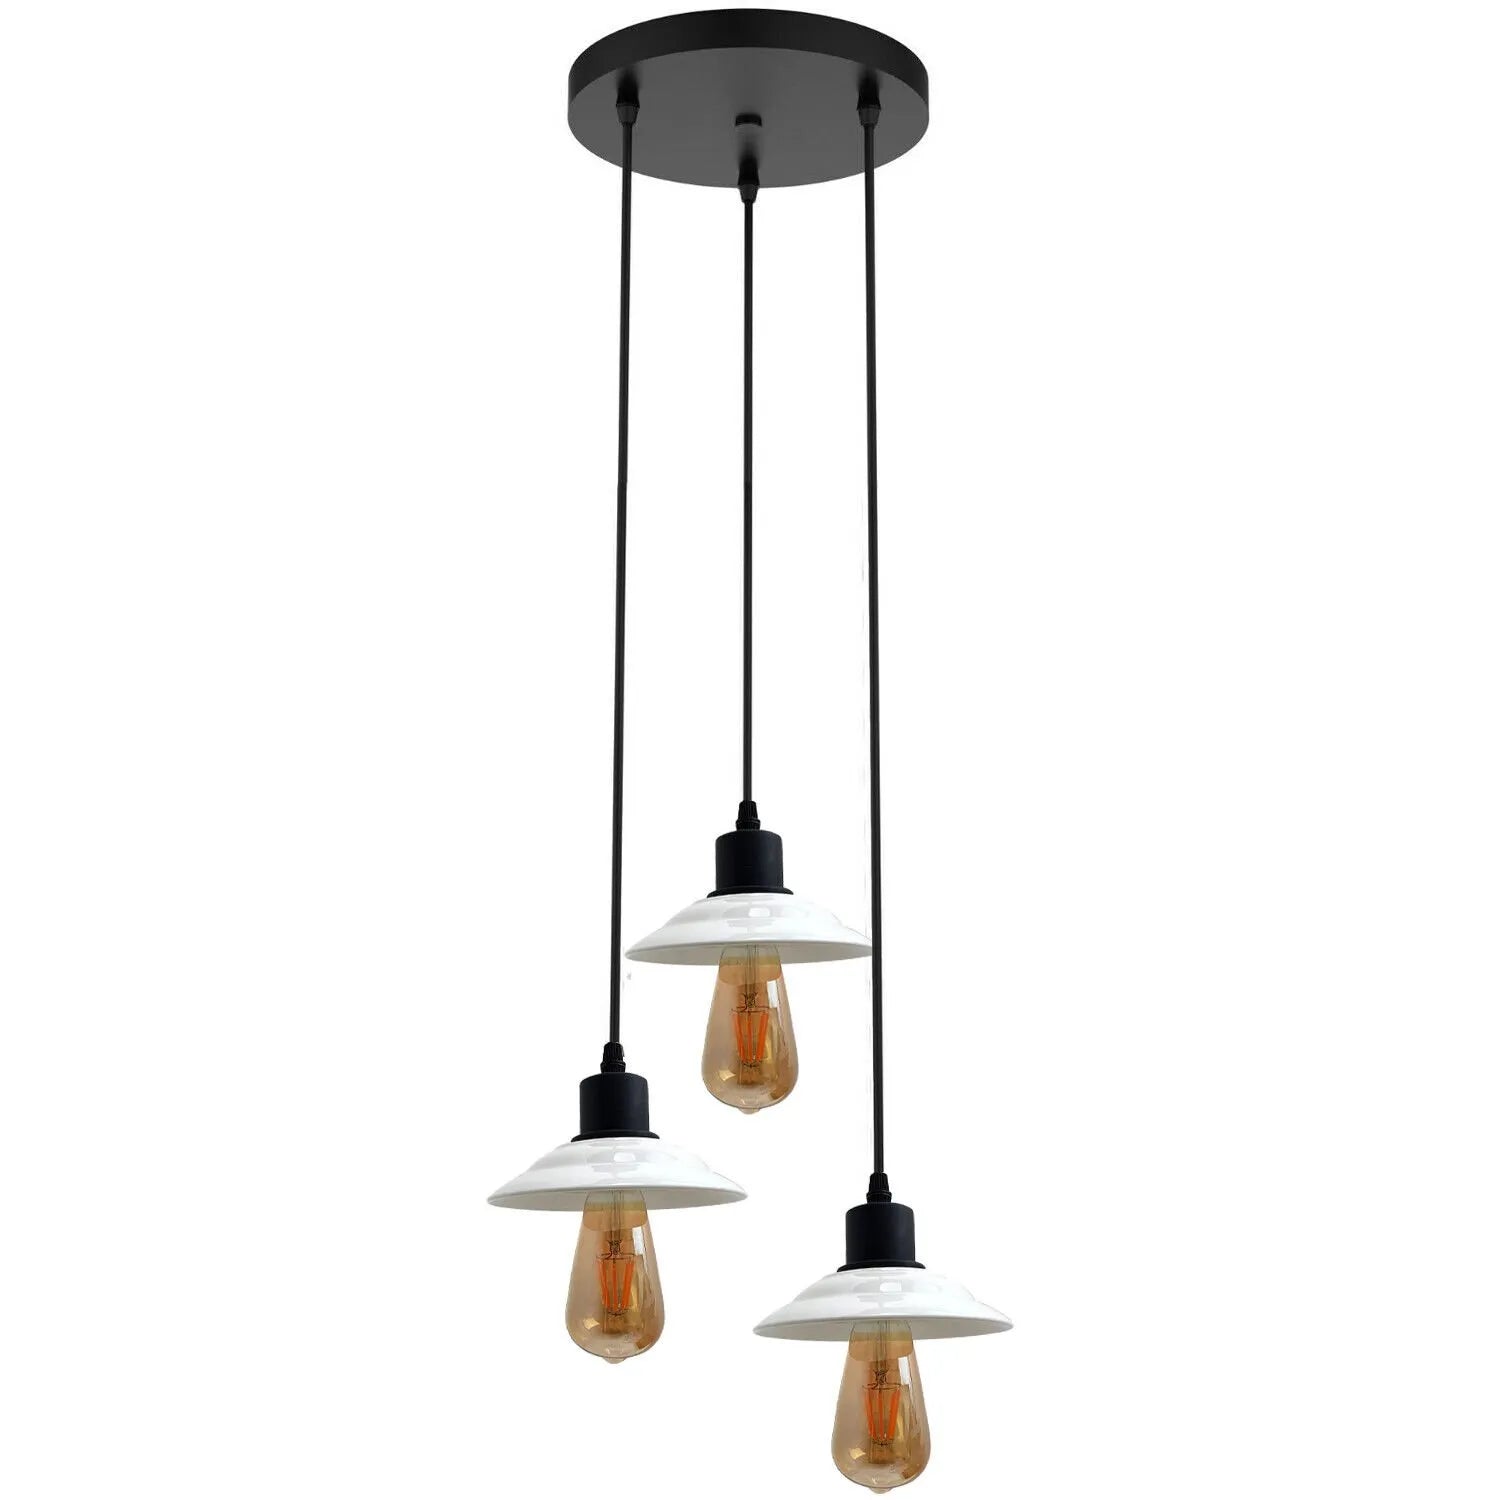  Ceramic Lamp Shade Ceiling hanging Pendant Light Fixture